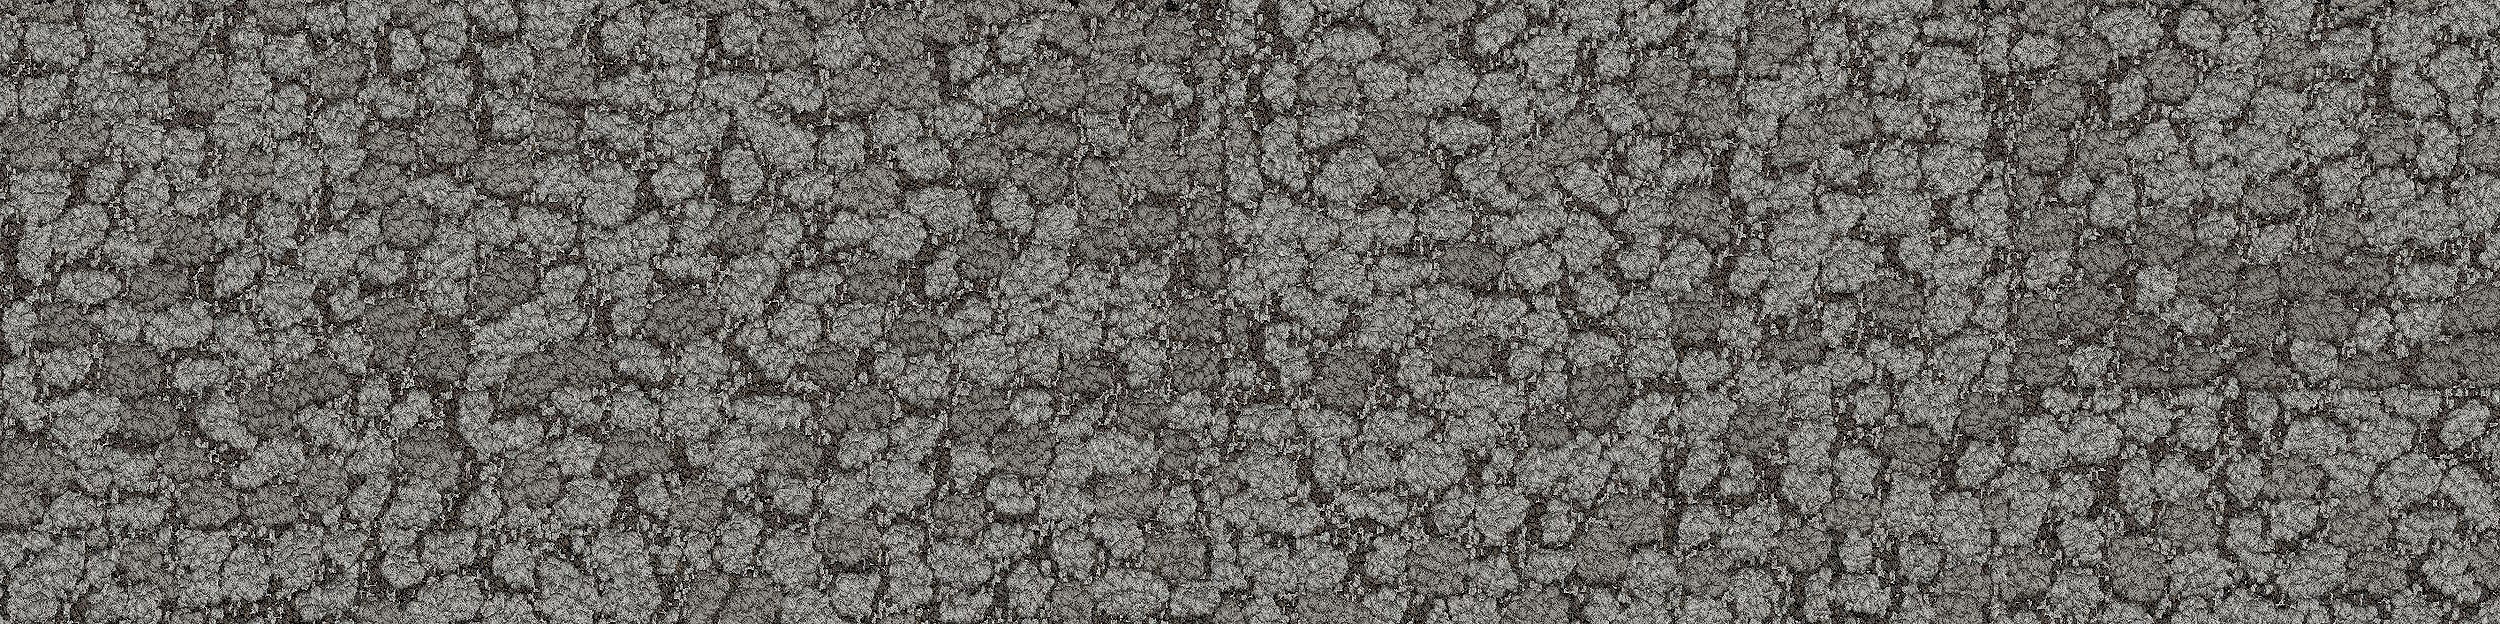 HN840 Carpet Tile In Nickel número de imagen 13